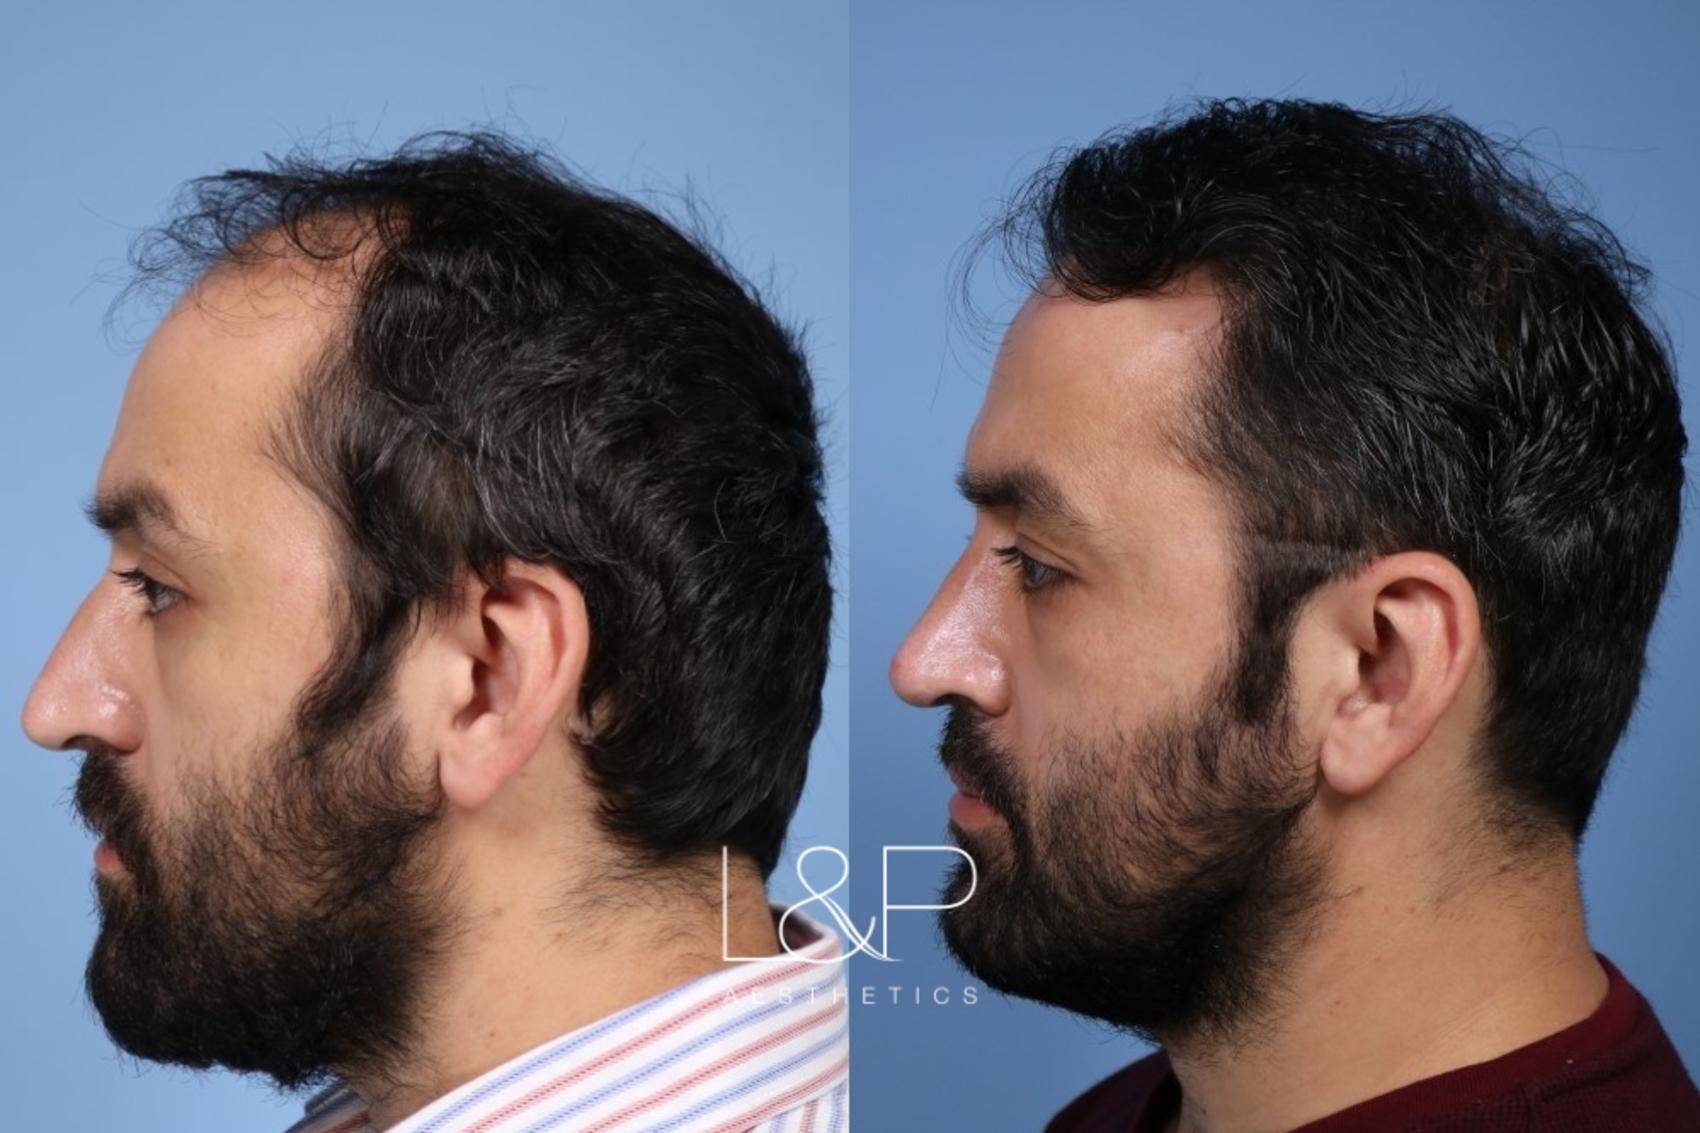 L&P Male Rhinoplasty & Hair Transplant